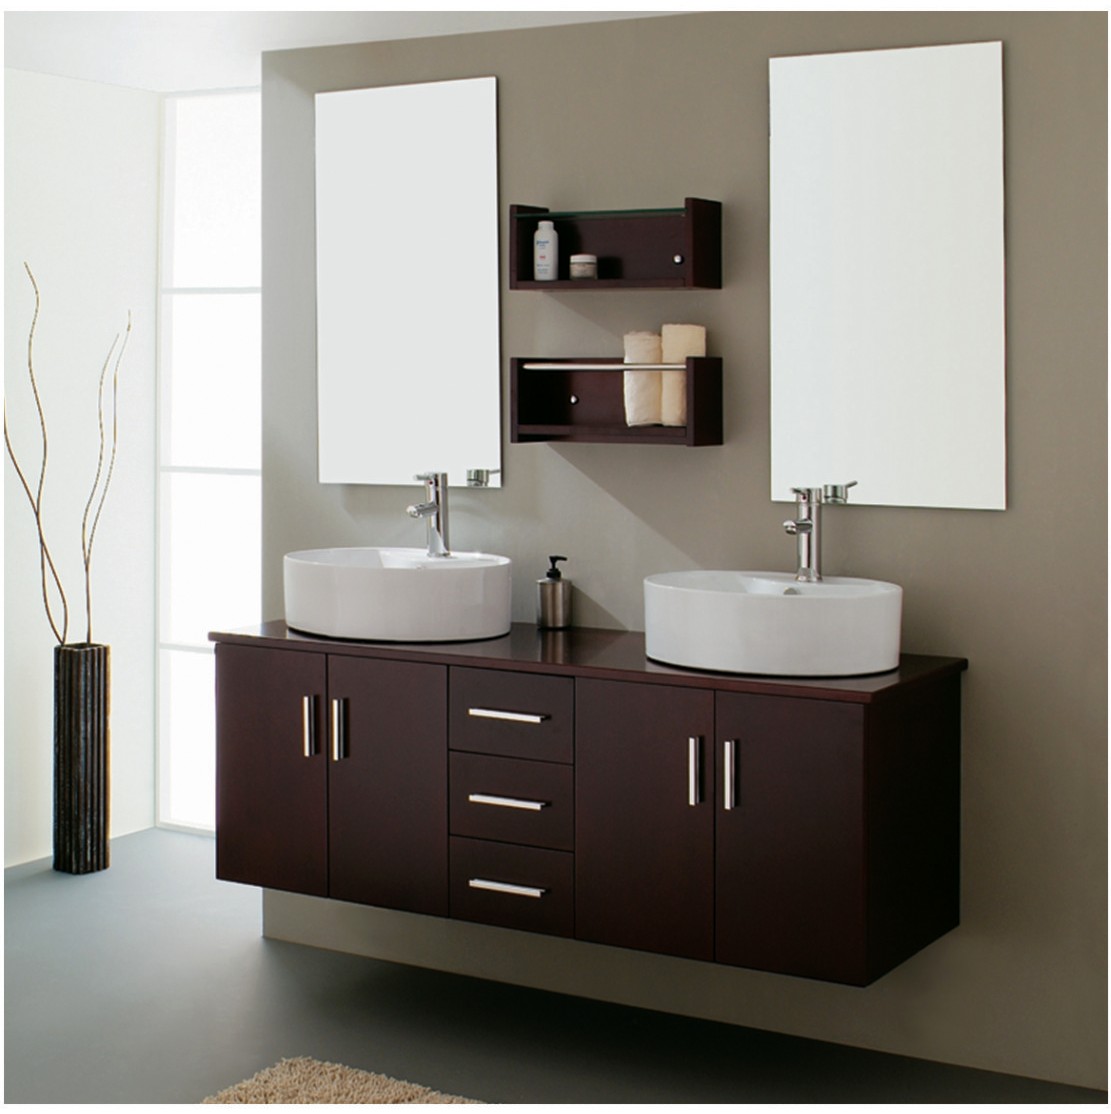 bathroom remodels pictures Bathroom Vanities and Cabinets 2013